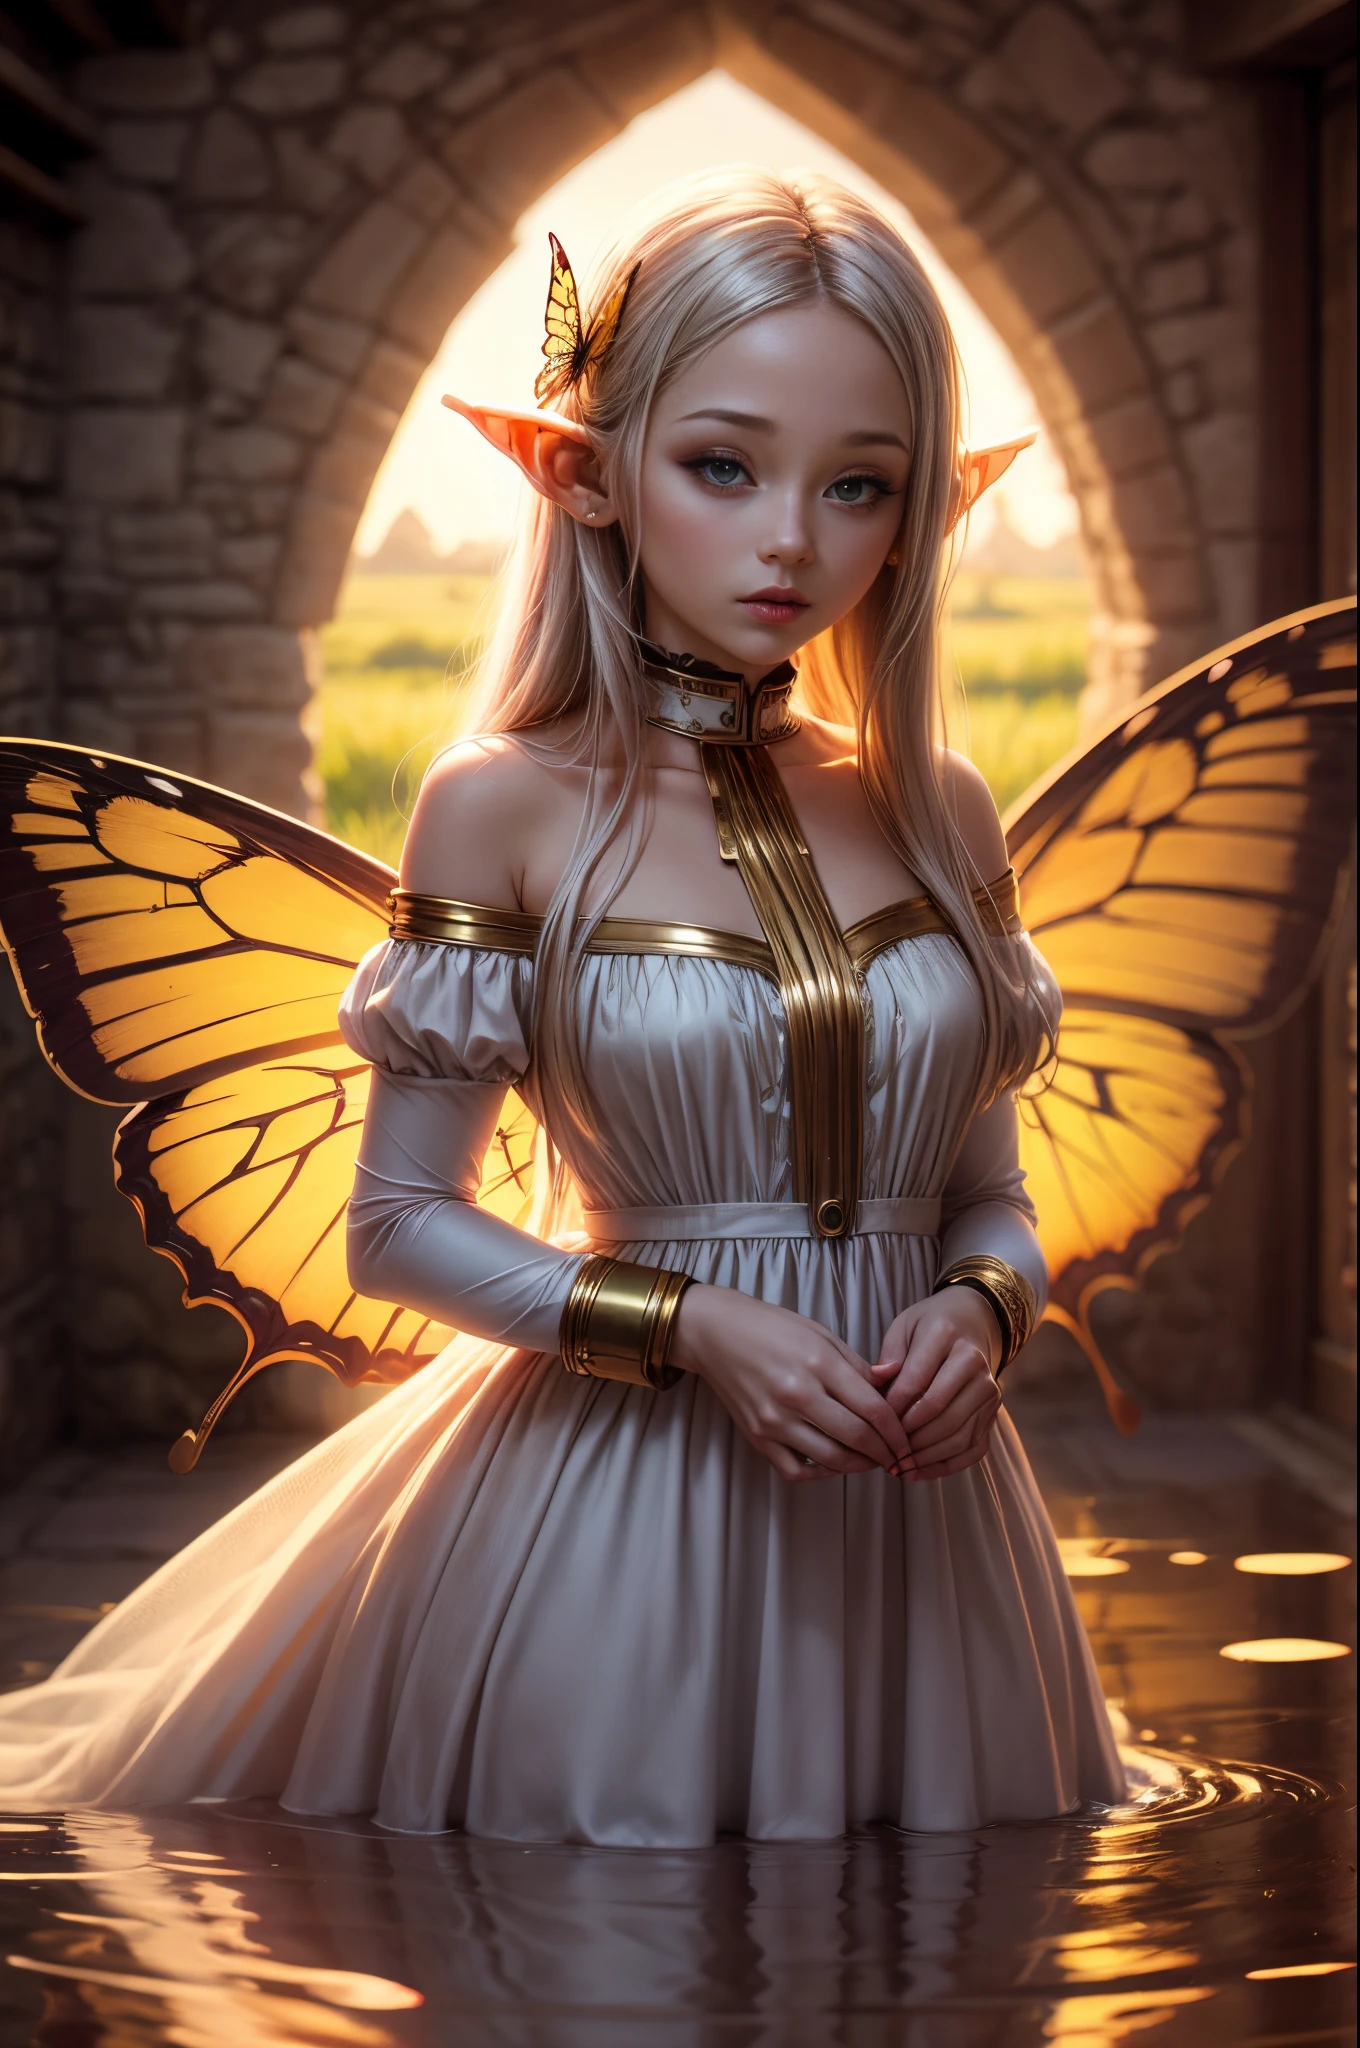 "((inocente)) garota elfa, Hora dourada, prado sonhador, etéreo, Excêntrico, vestido esvoaçante, luz solar suave, encantador, Asas de borboleta, (nuvens pastel), reflexos líquidos,congelar